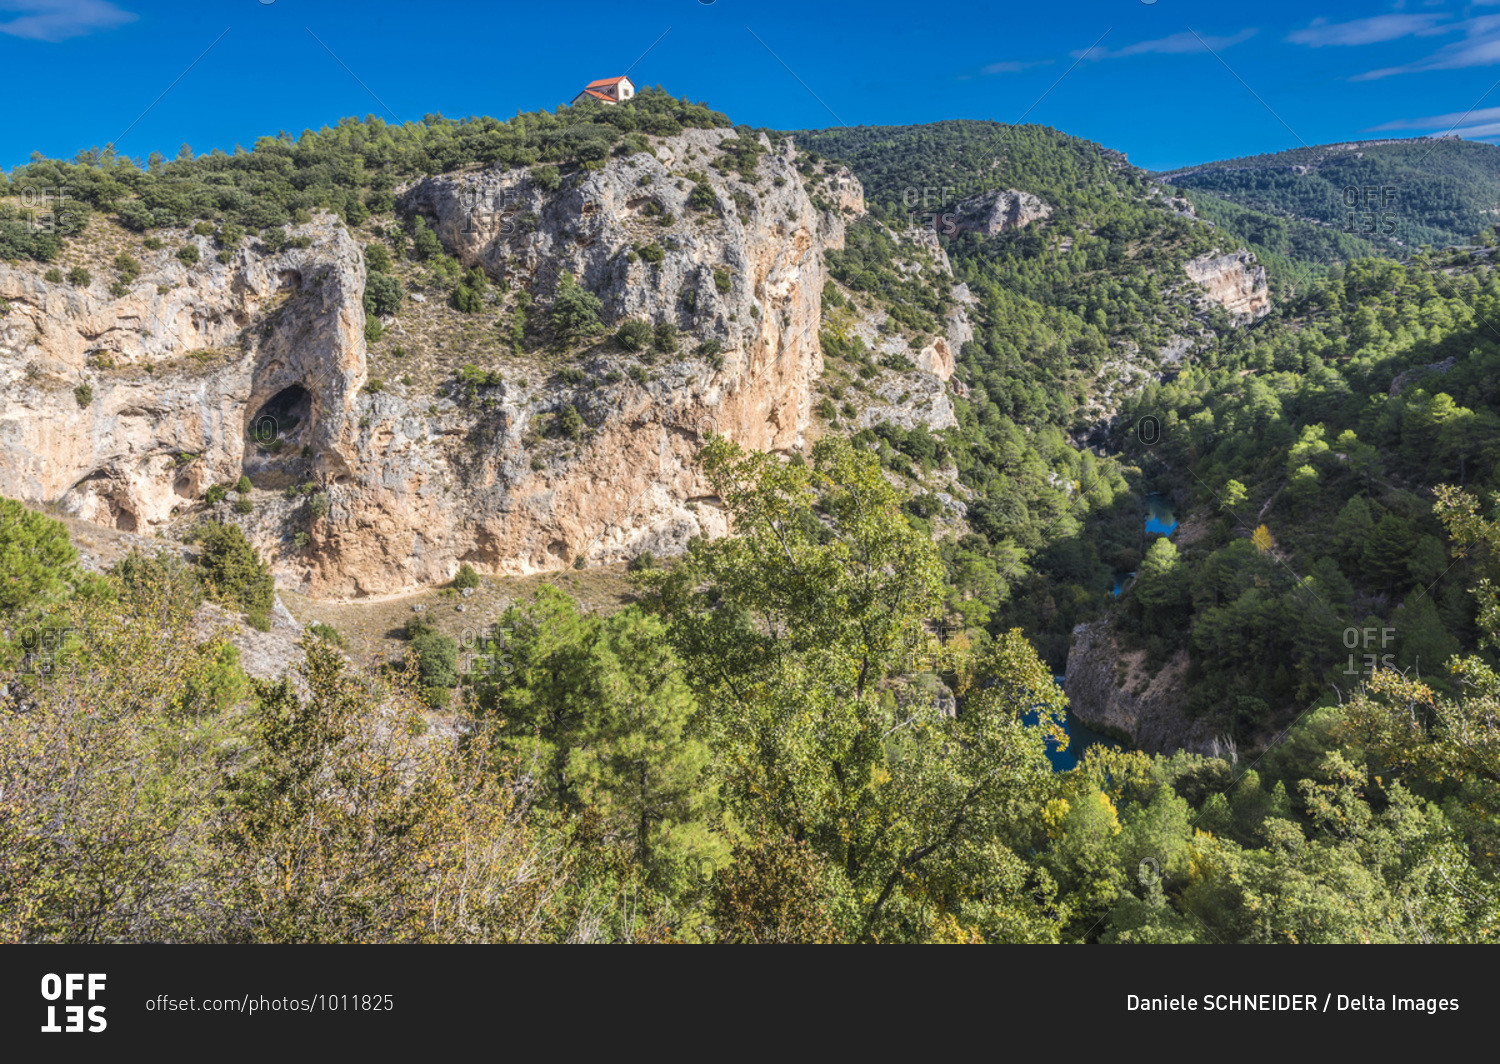 Spain, autonomous community of Castile - La Mancha, province of Cuenca, Serrania de Cuenca National park, gorge of the Jucar river seen from the Ventano del Diablo